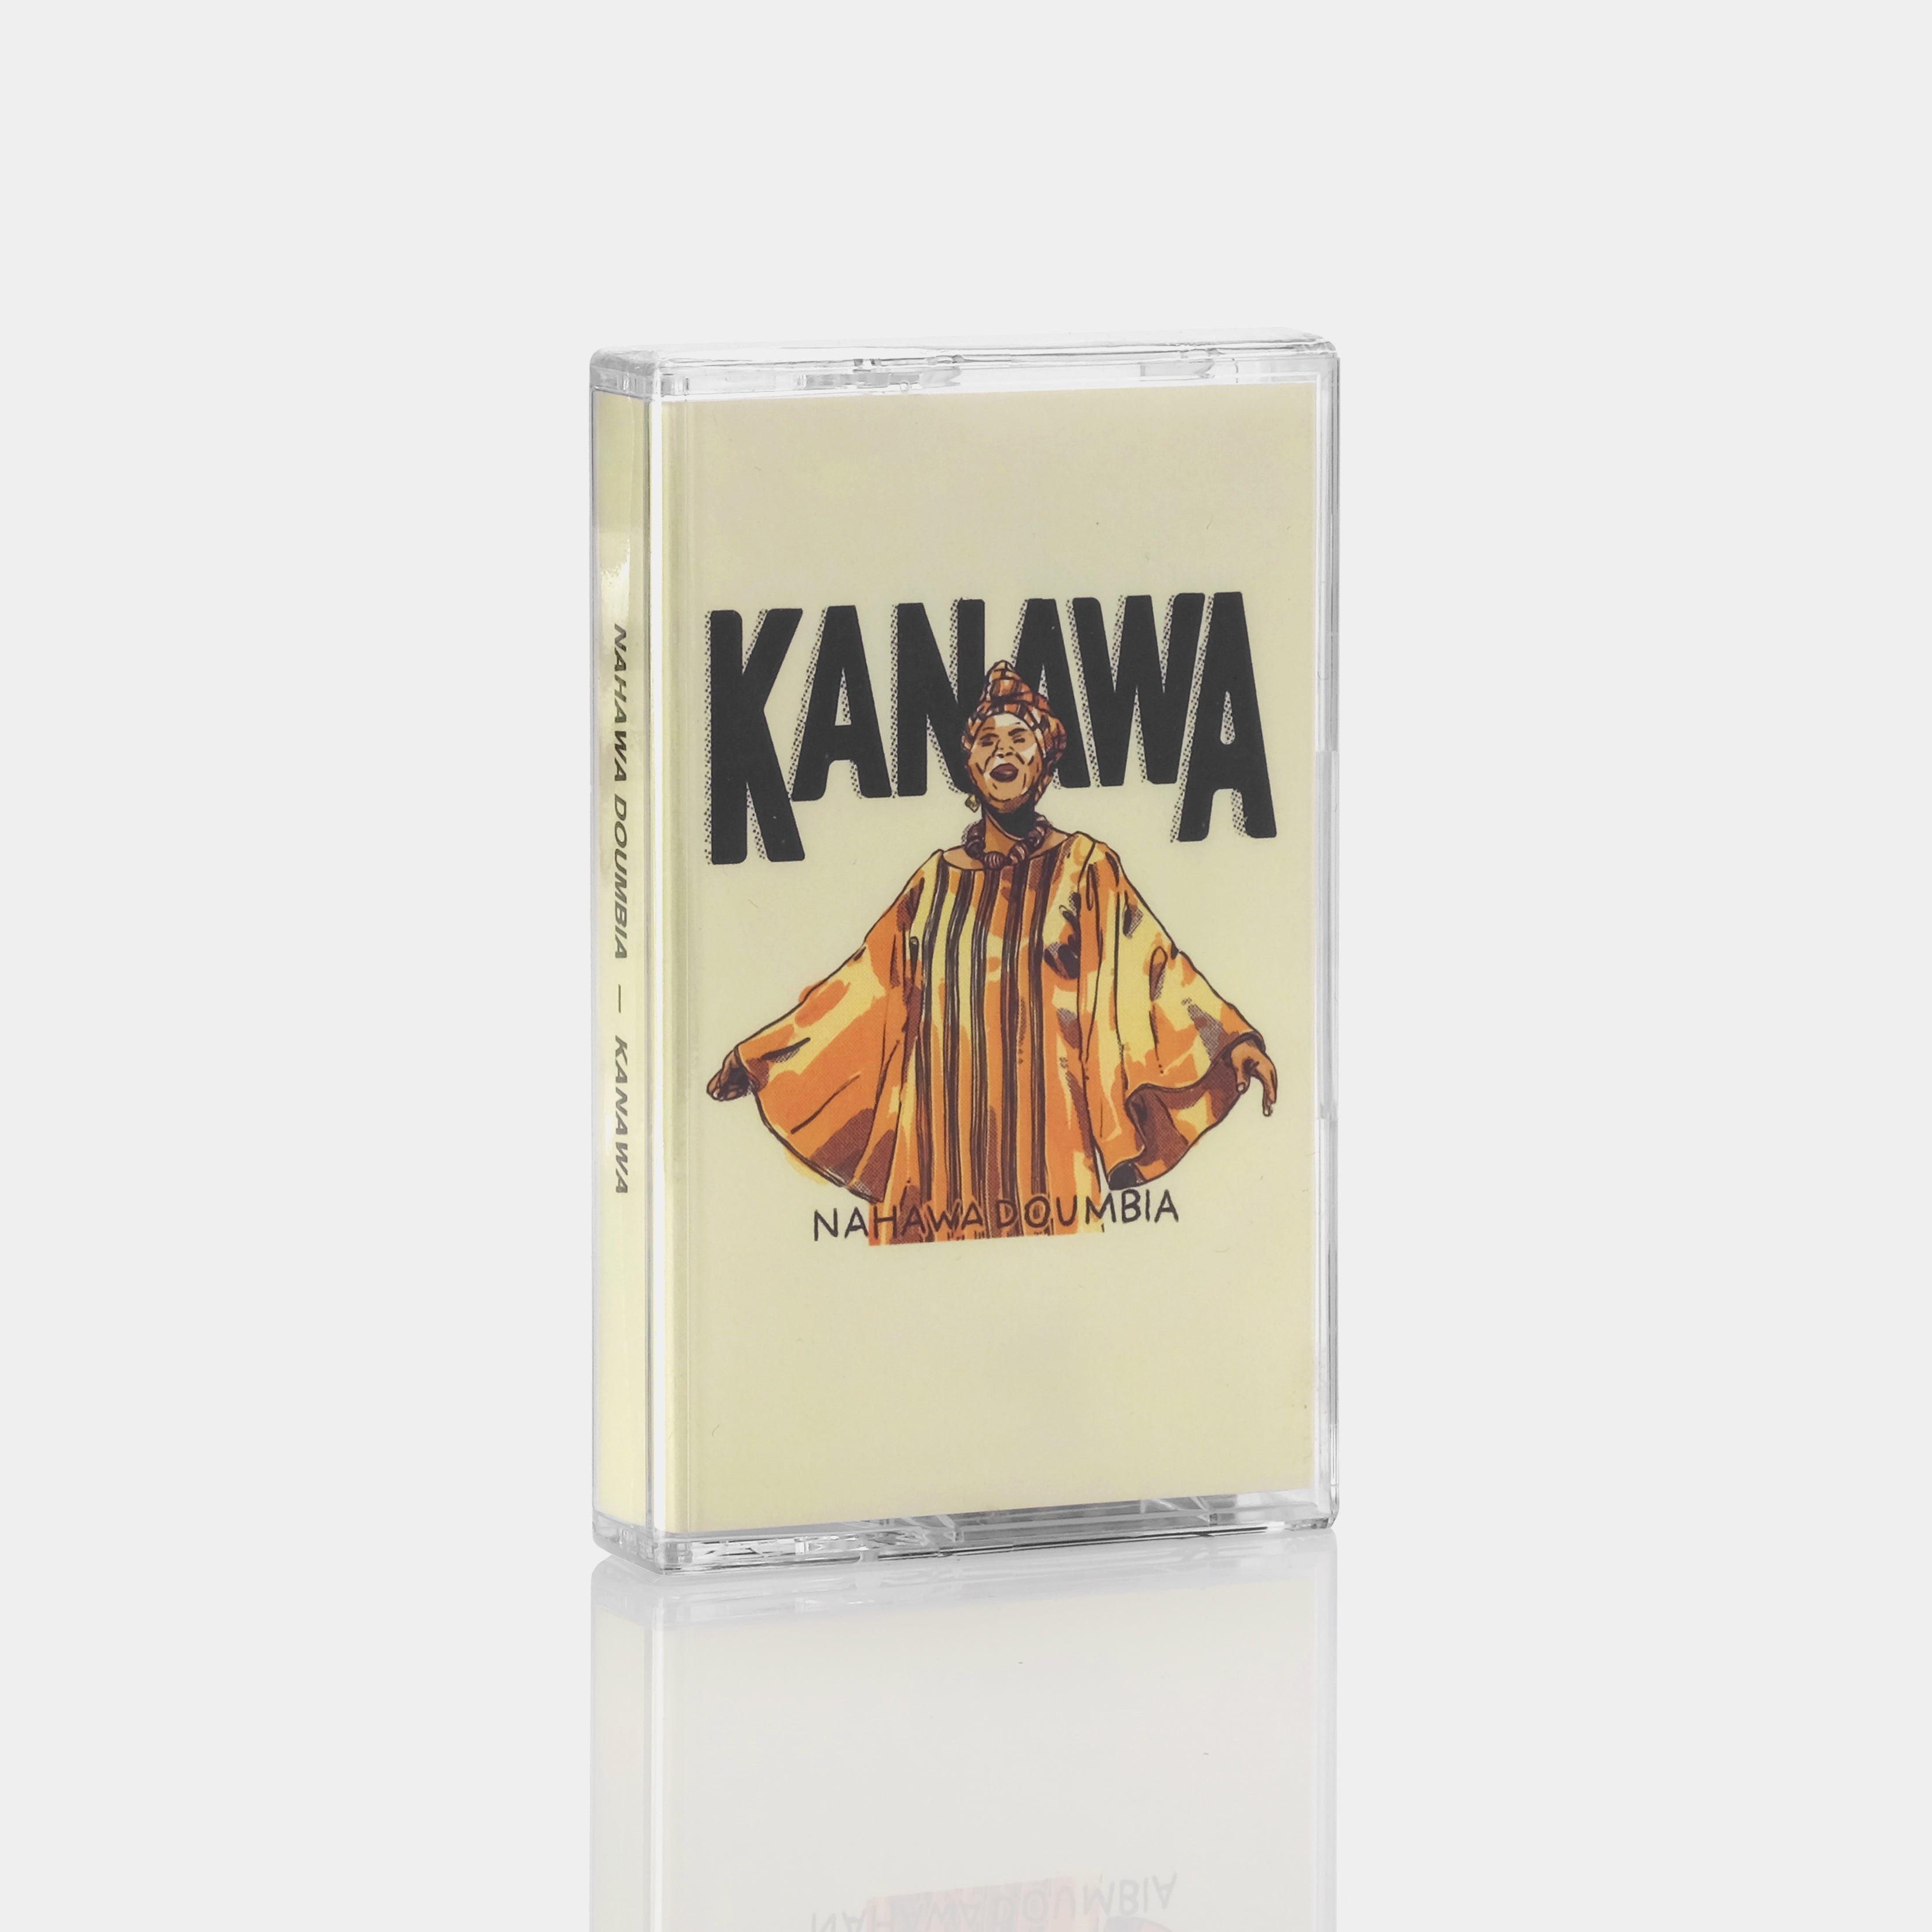 Nahawa Doumbia - Kanawa Cassette Tape